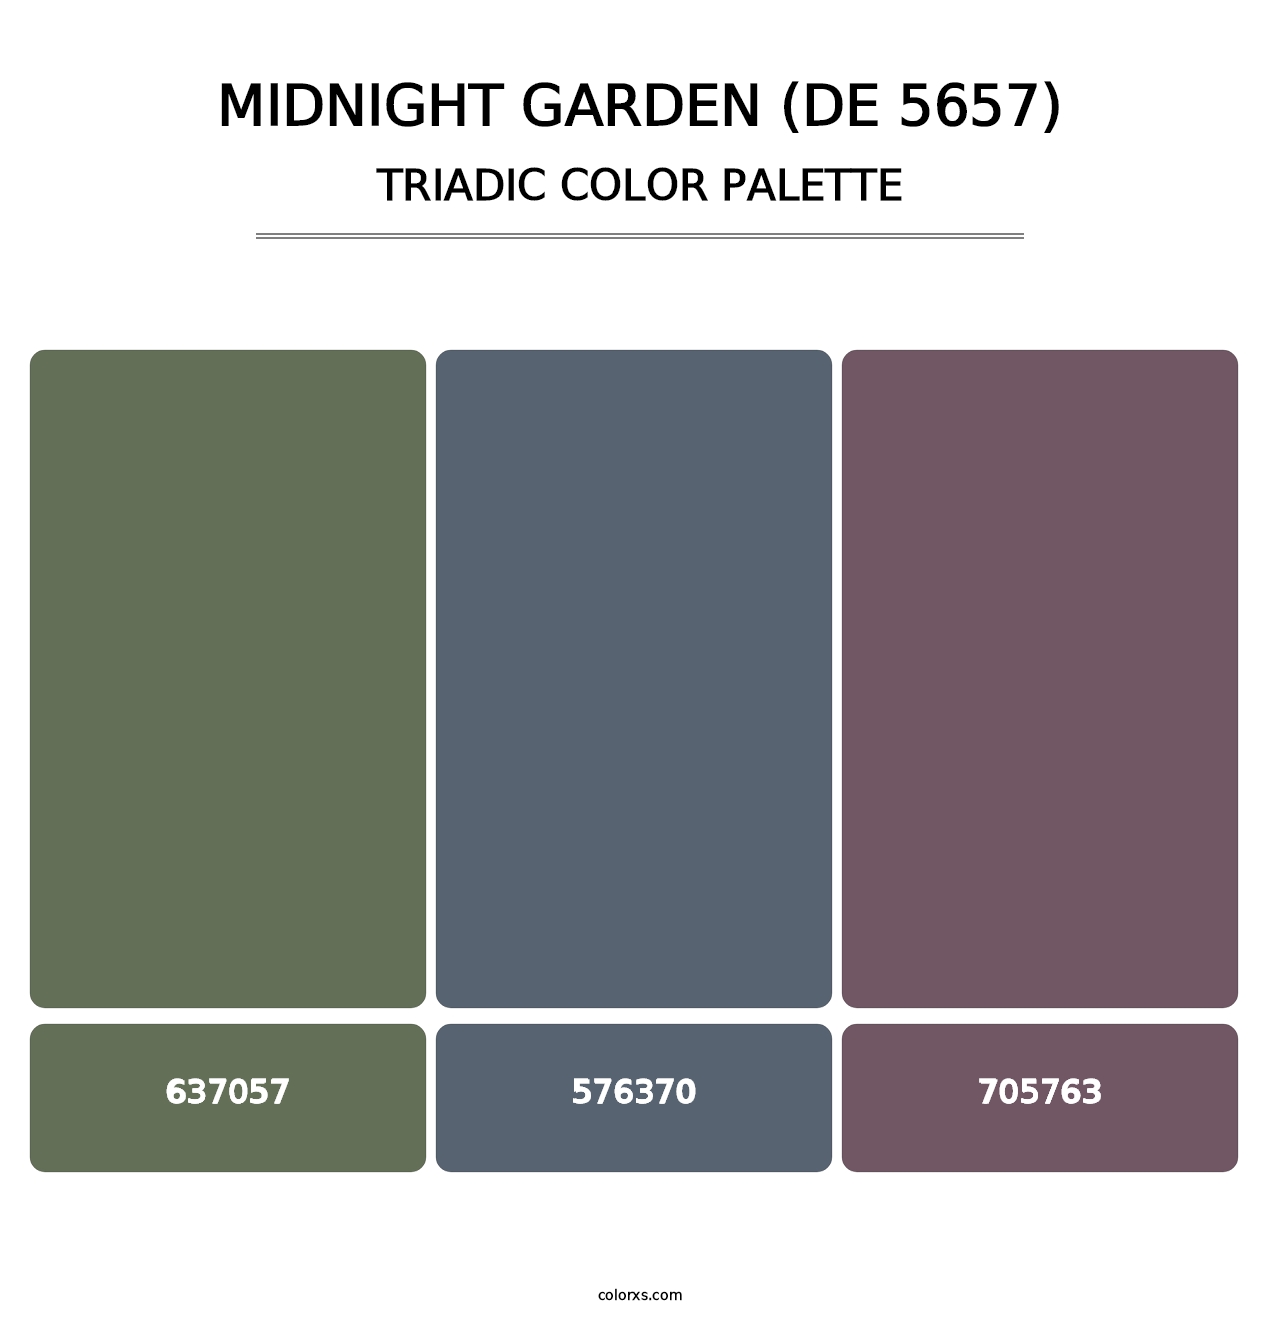 Midnight Garden (DE 5657) - Triadic Color Palette